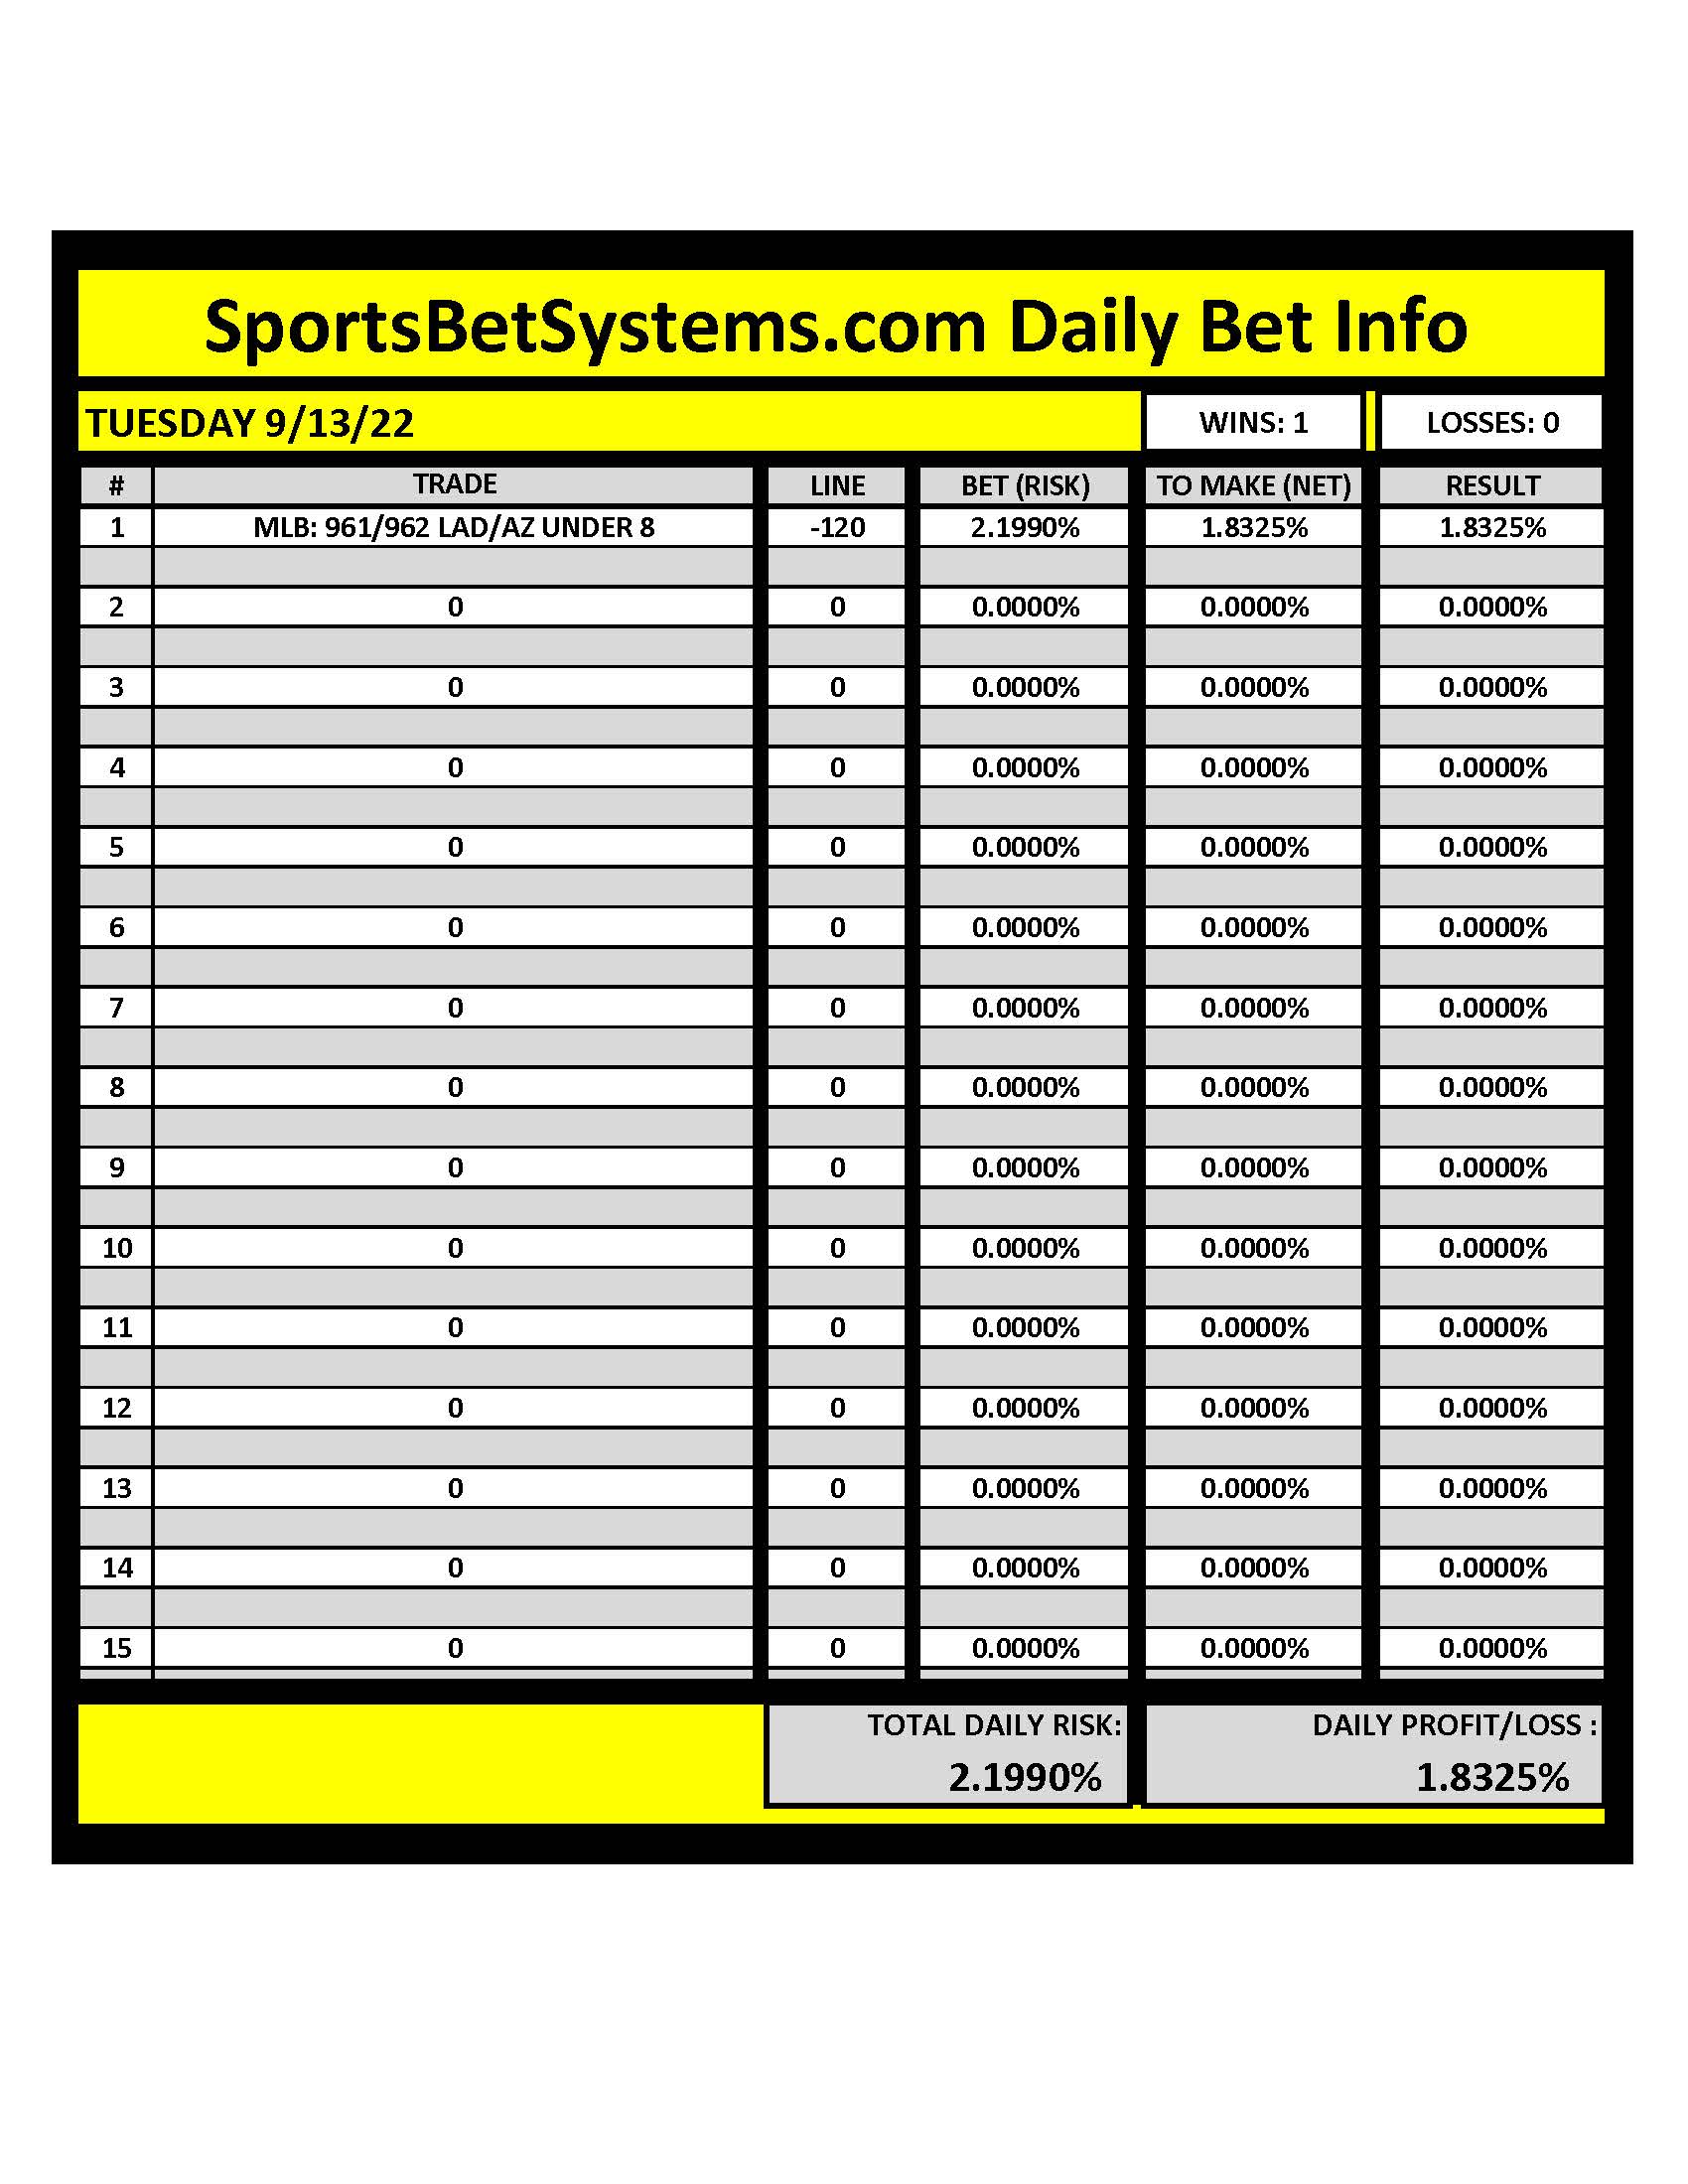 SportsBetSystems.com 9/13/22 Daily Results